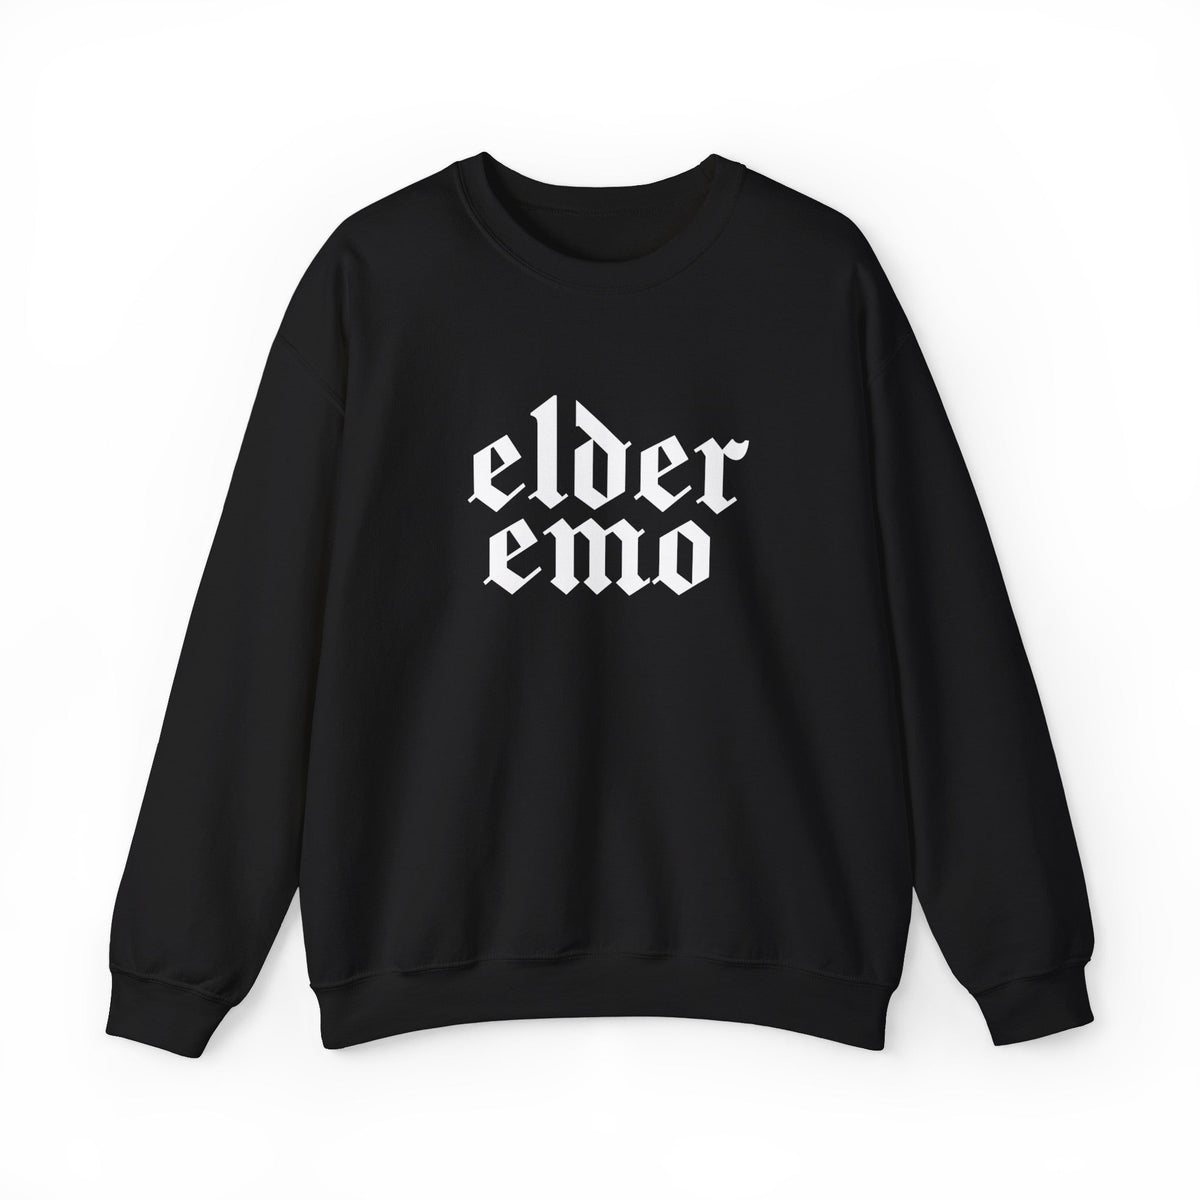 Elder Emo Gothic Font Crewneck Sweatshirt - Goth Cloth Co.Sweatshirt14832608344485088268